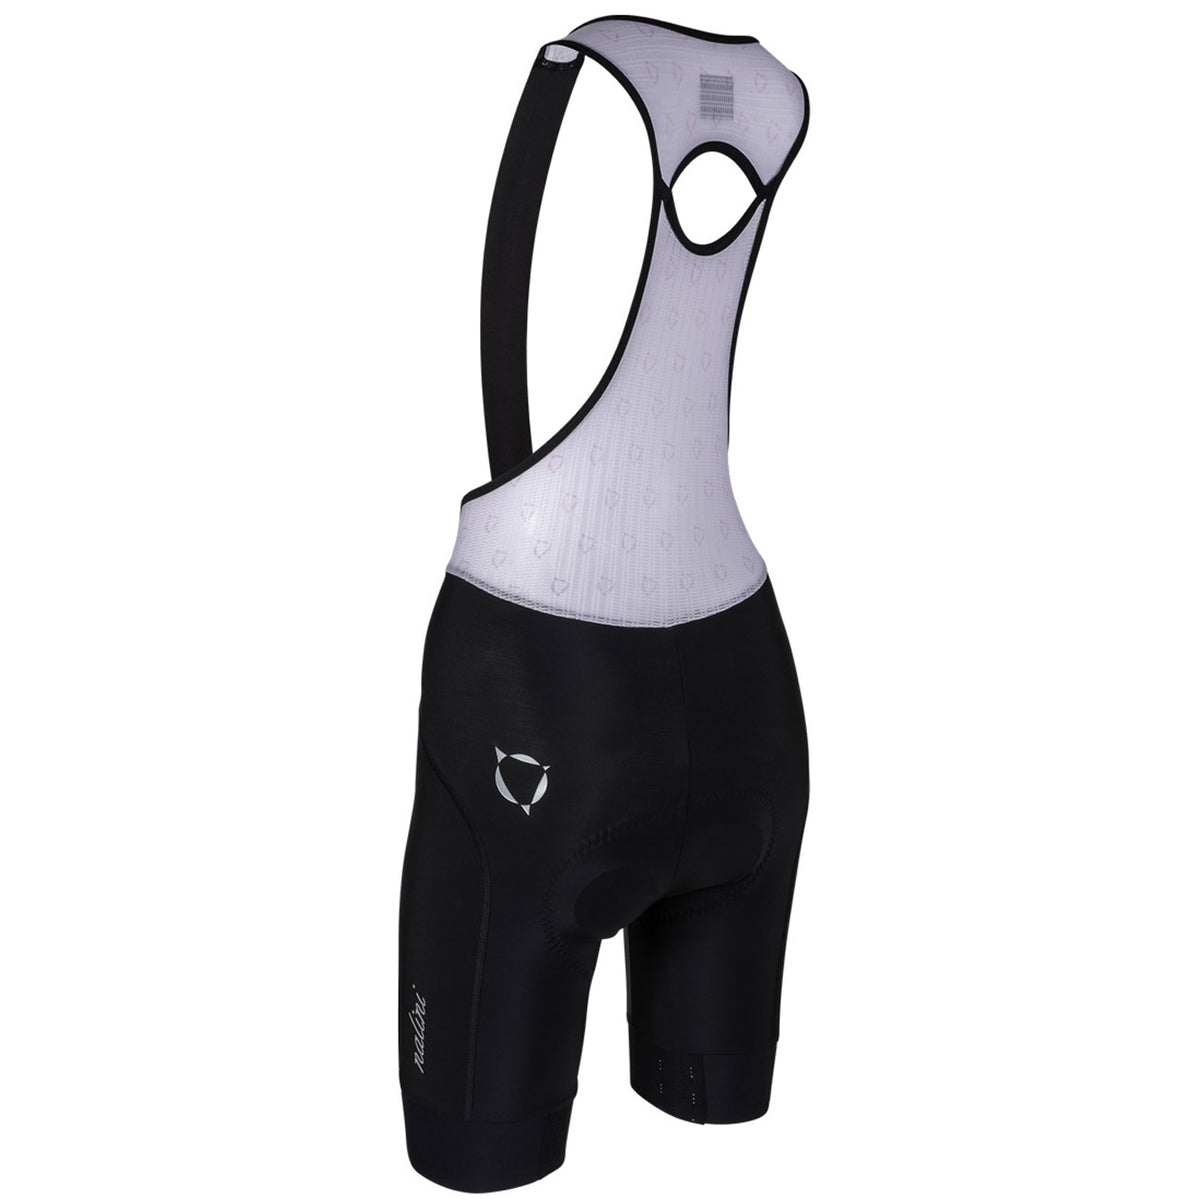 nalini sport cycling bib shorts